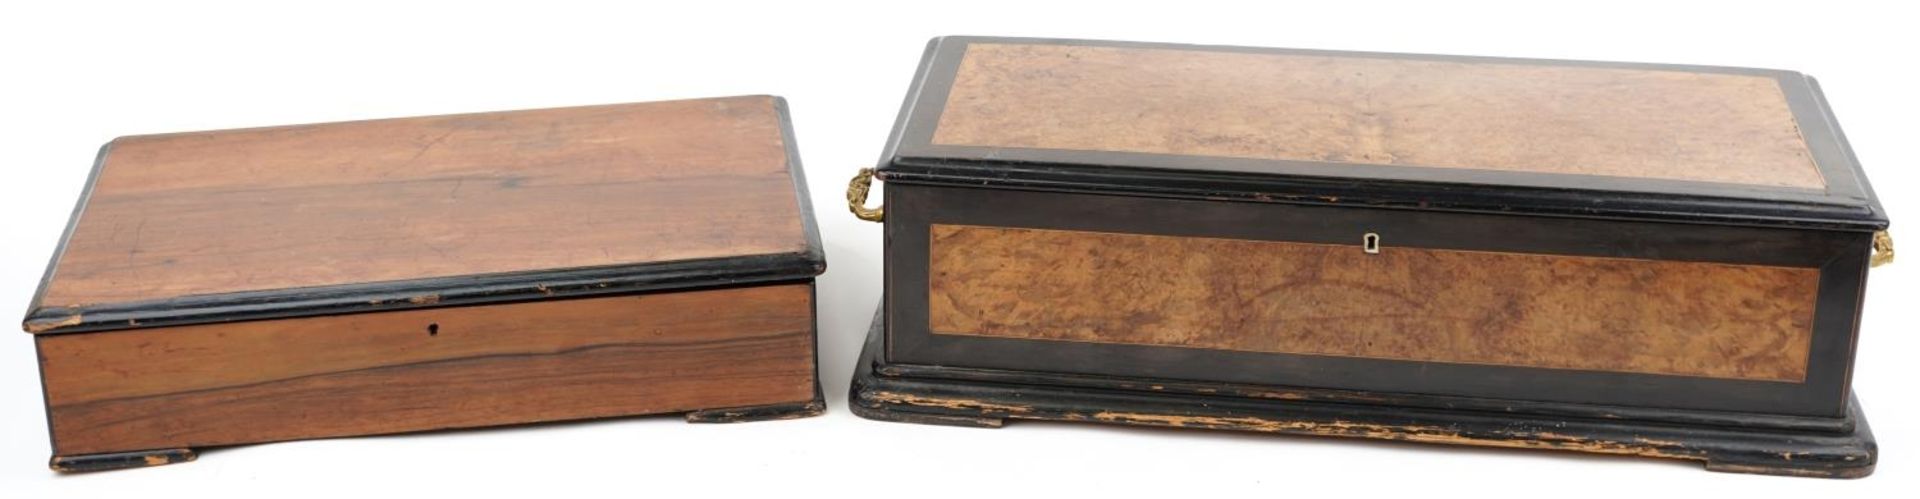 Nicol Freres, good large 19th century Swiss inlaid burr walnut and ebonised music box with gilt - Image 8 of 11